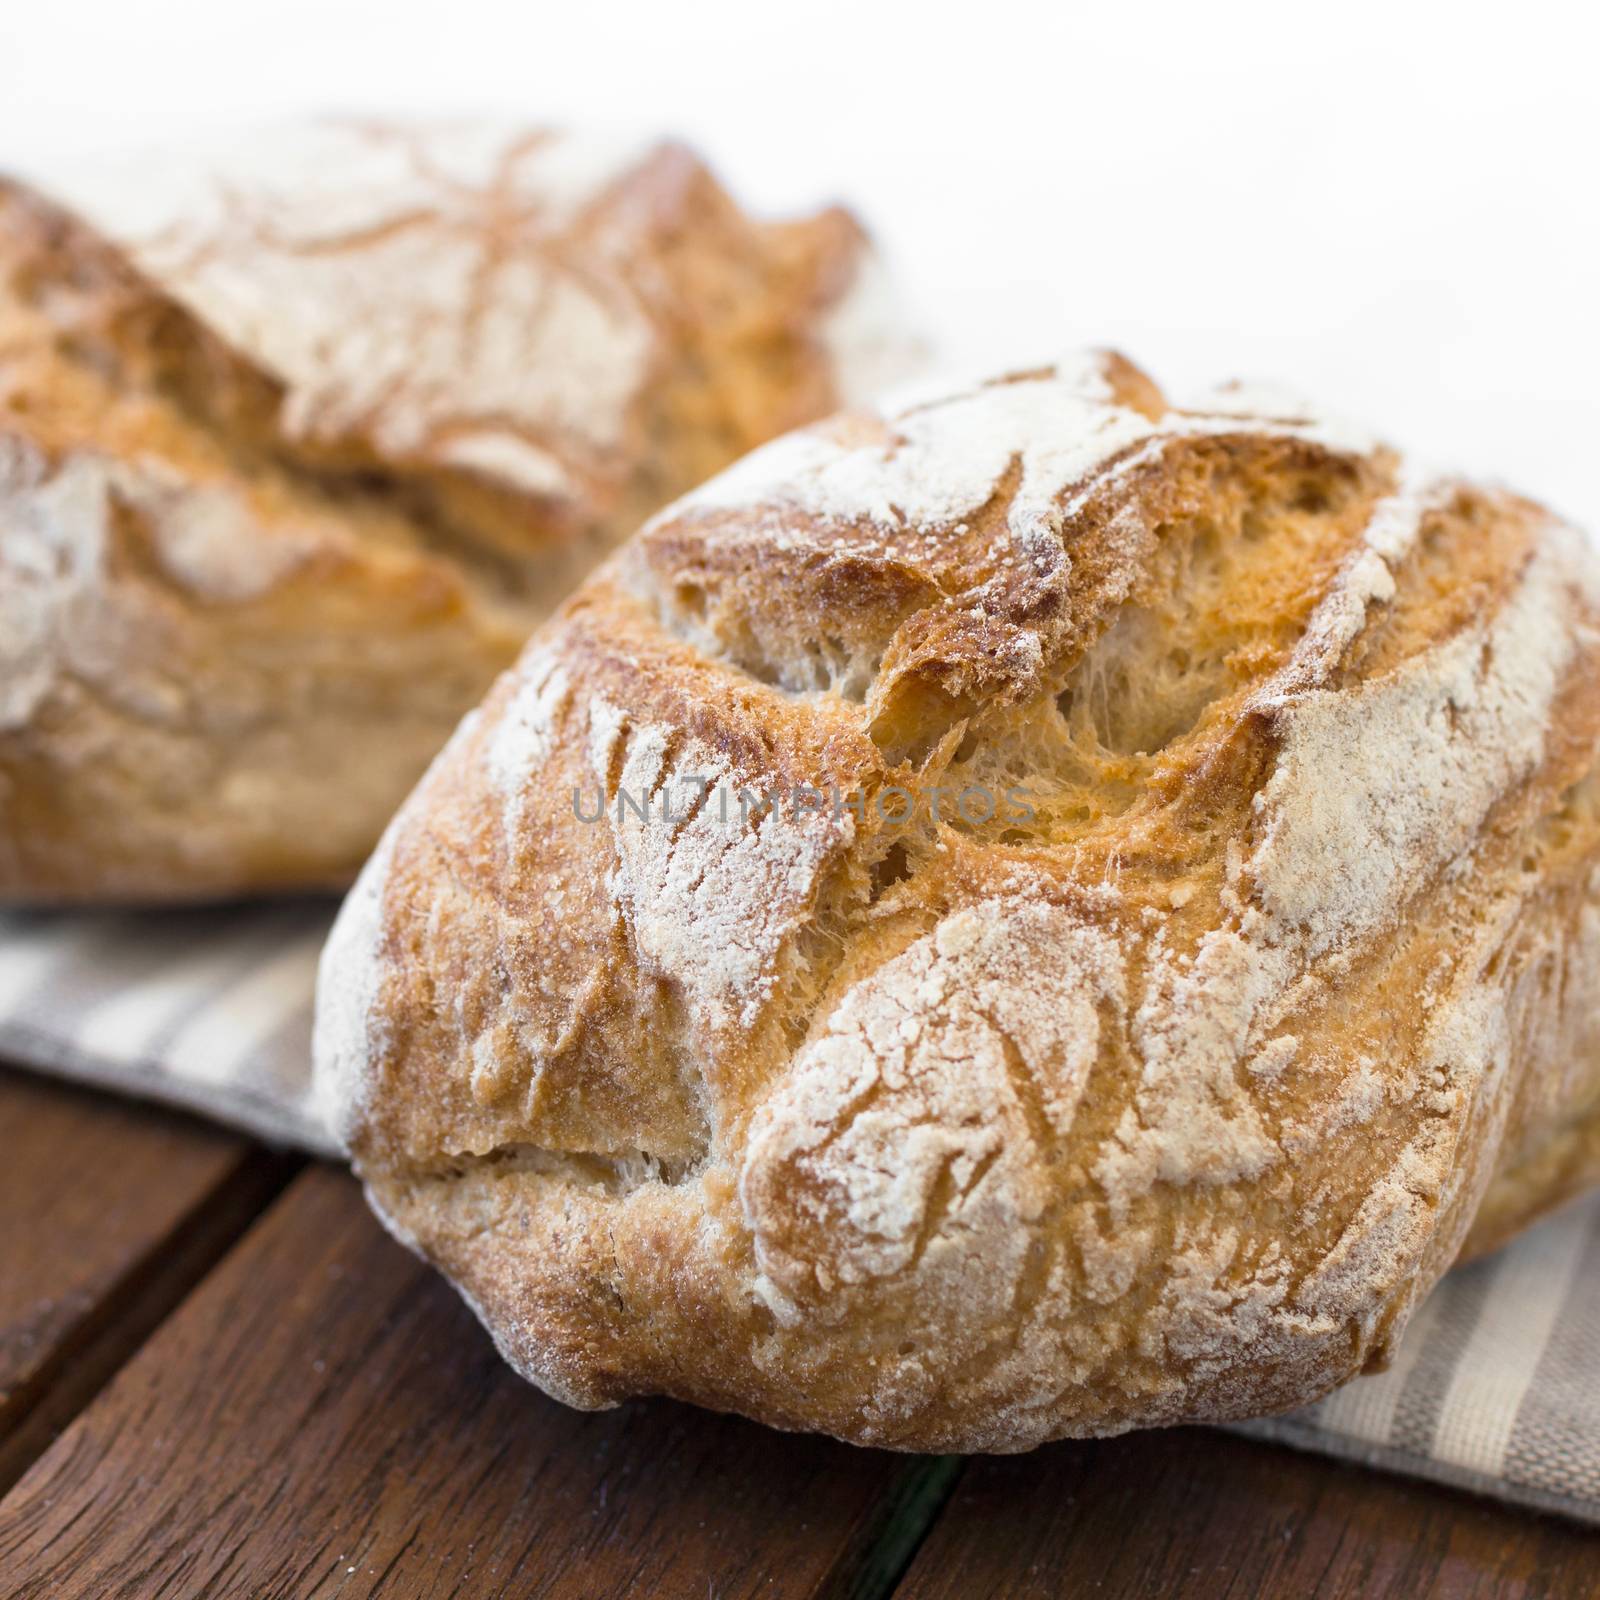 Handmade tasty bread lying on burlap on the wooden table